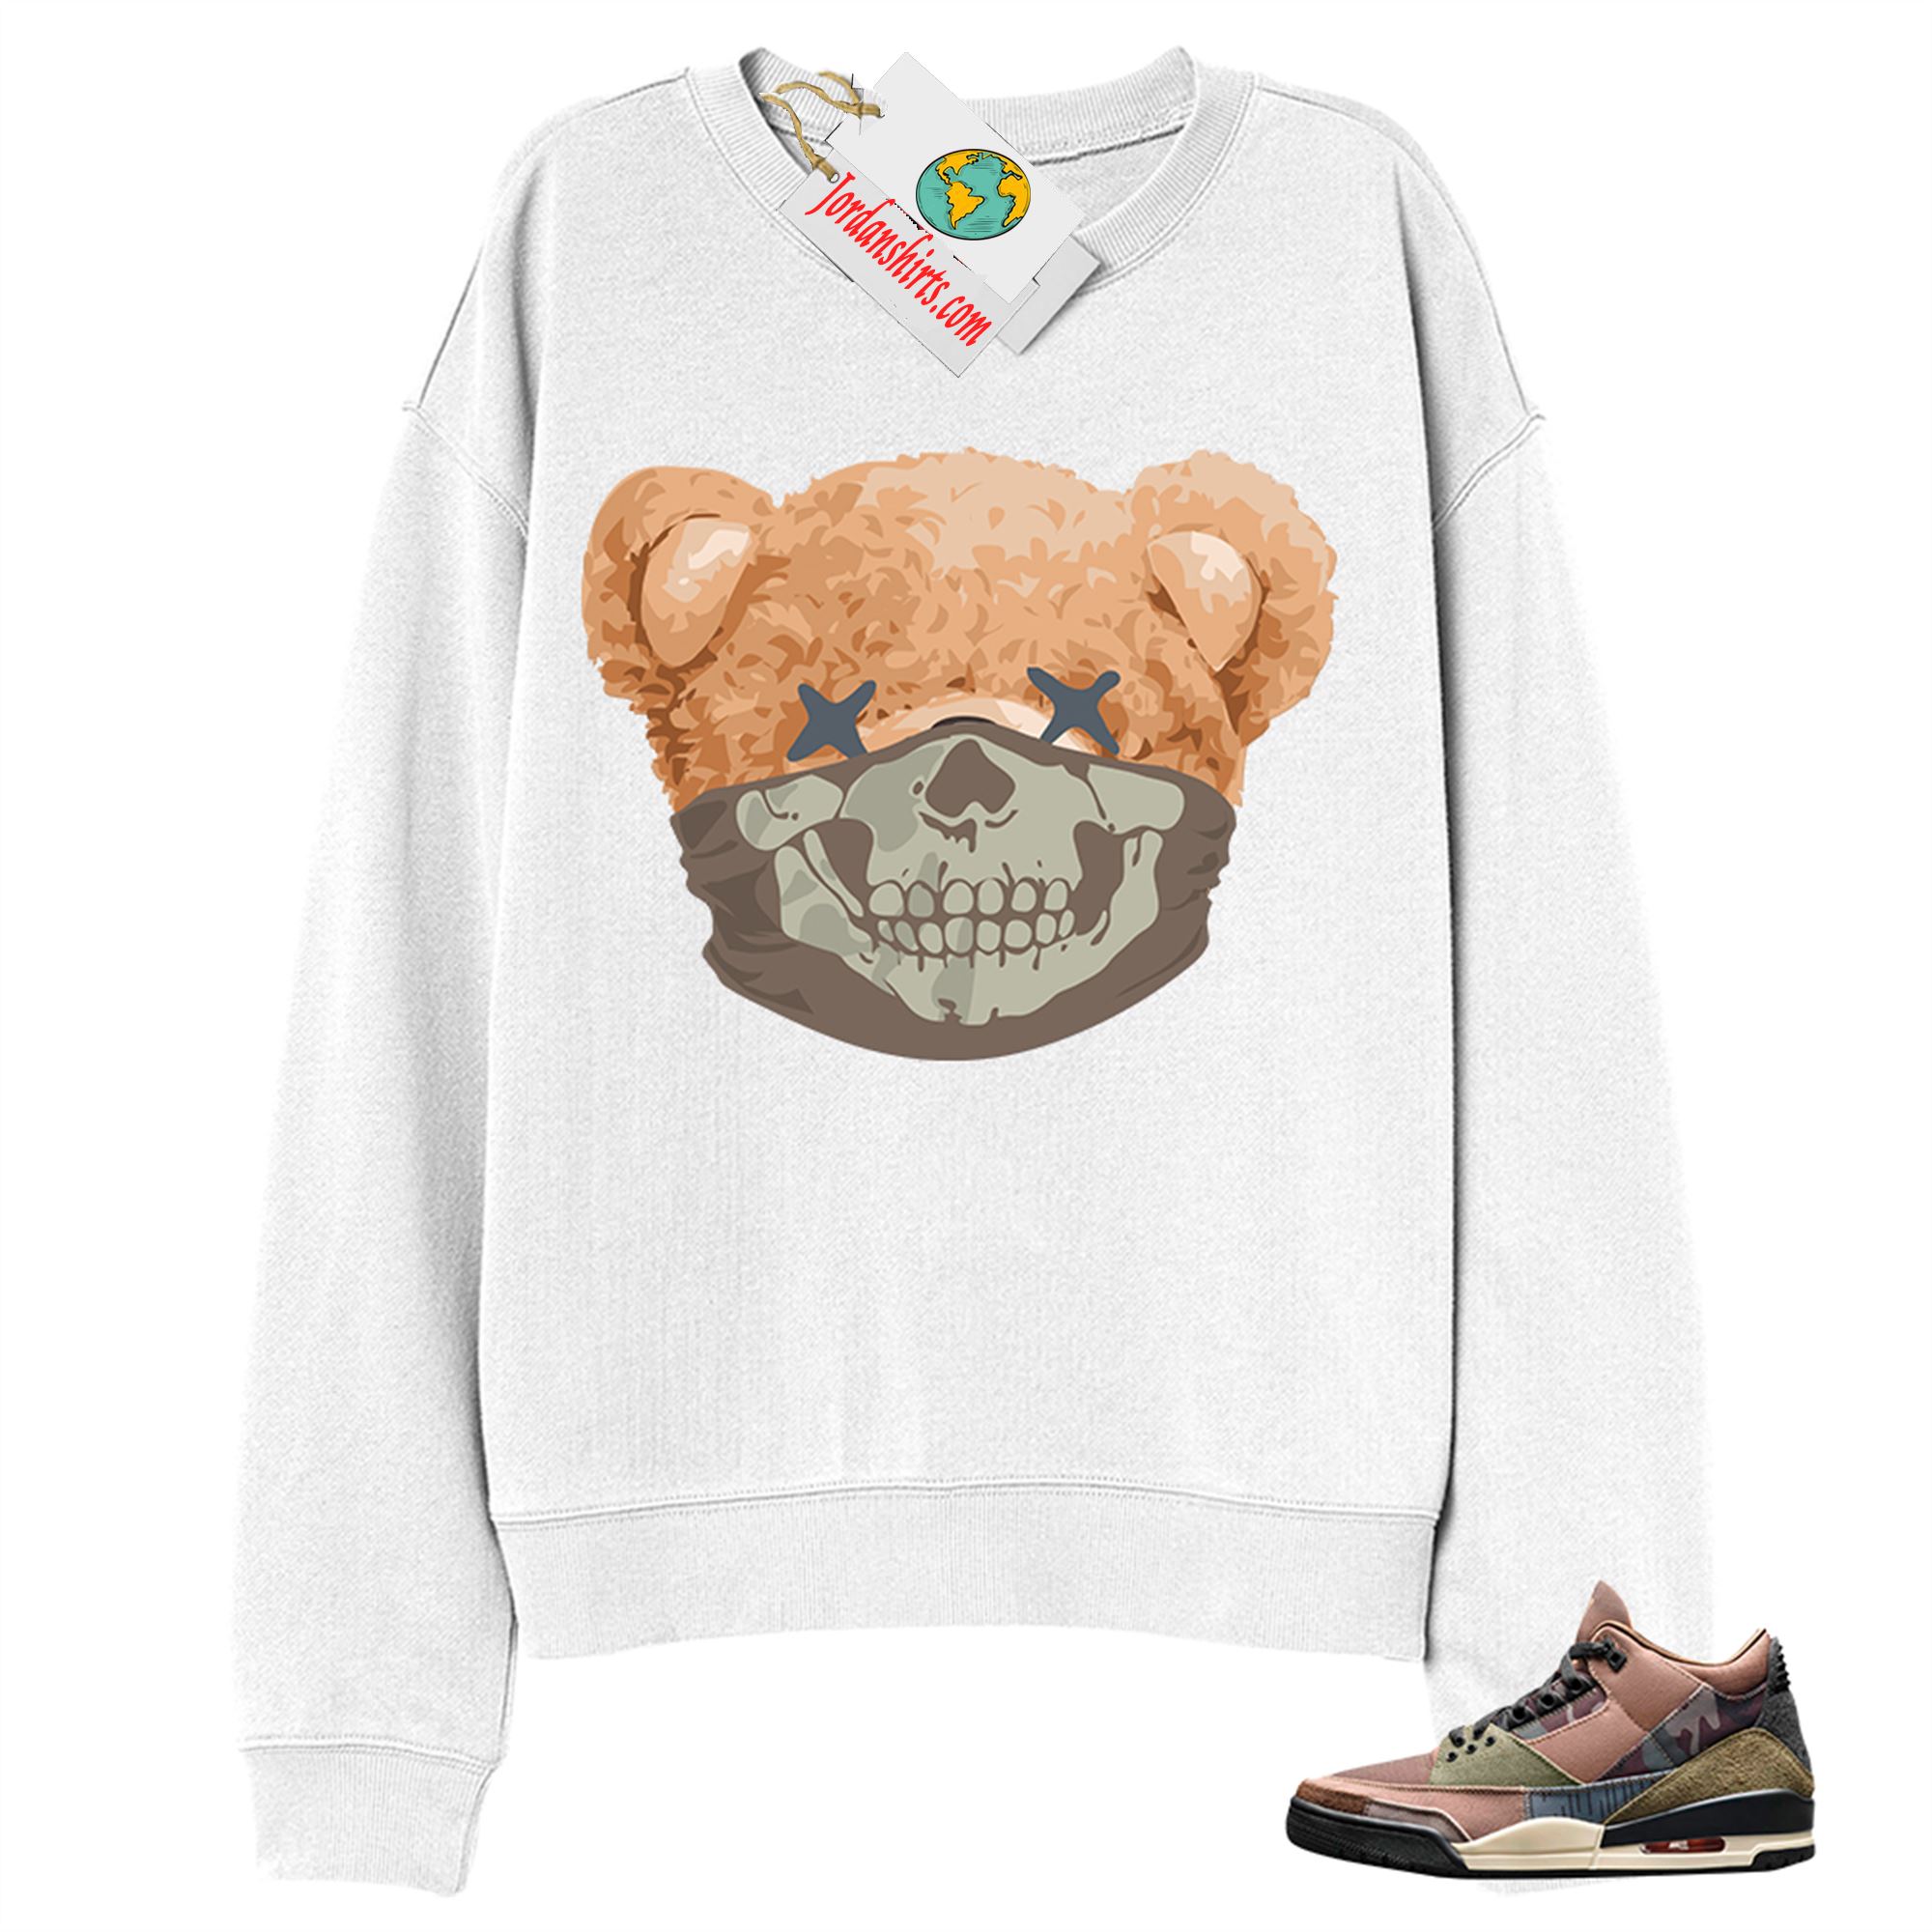 Jordan 3 Sweatshirt, Teddy Bear Skull Bandana White Sweatshirt Air Jordan 3 Camo 3s Full Size Up To 5xl